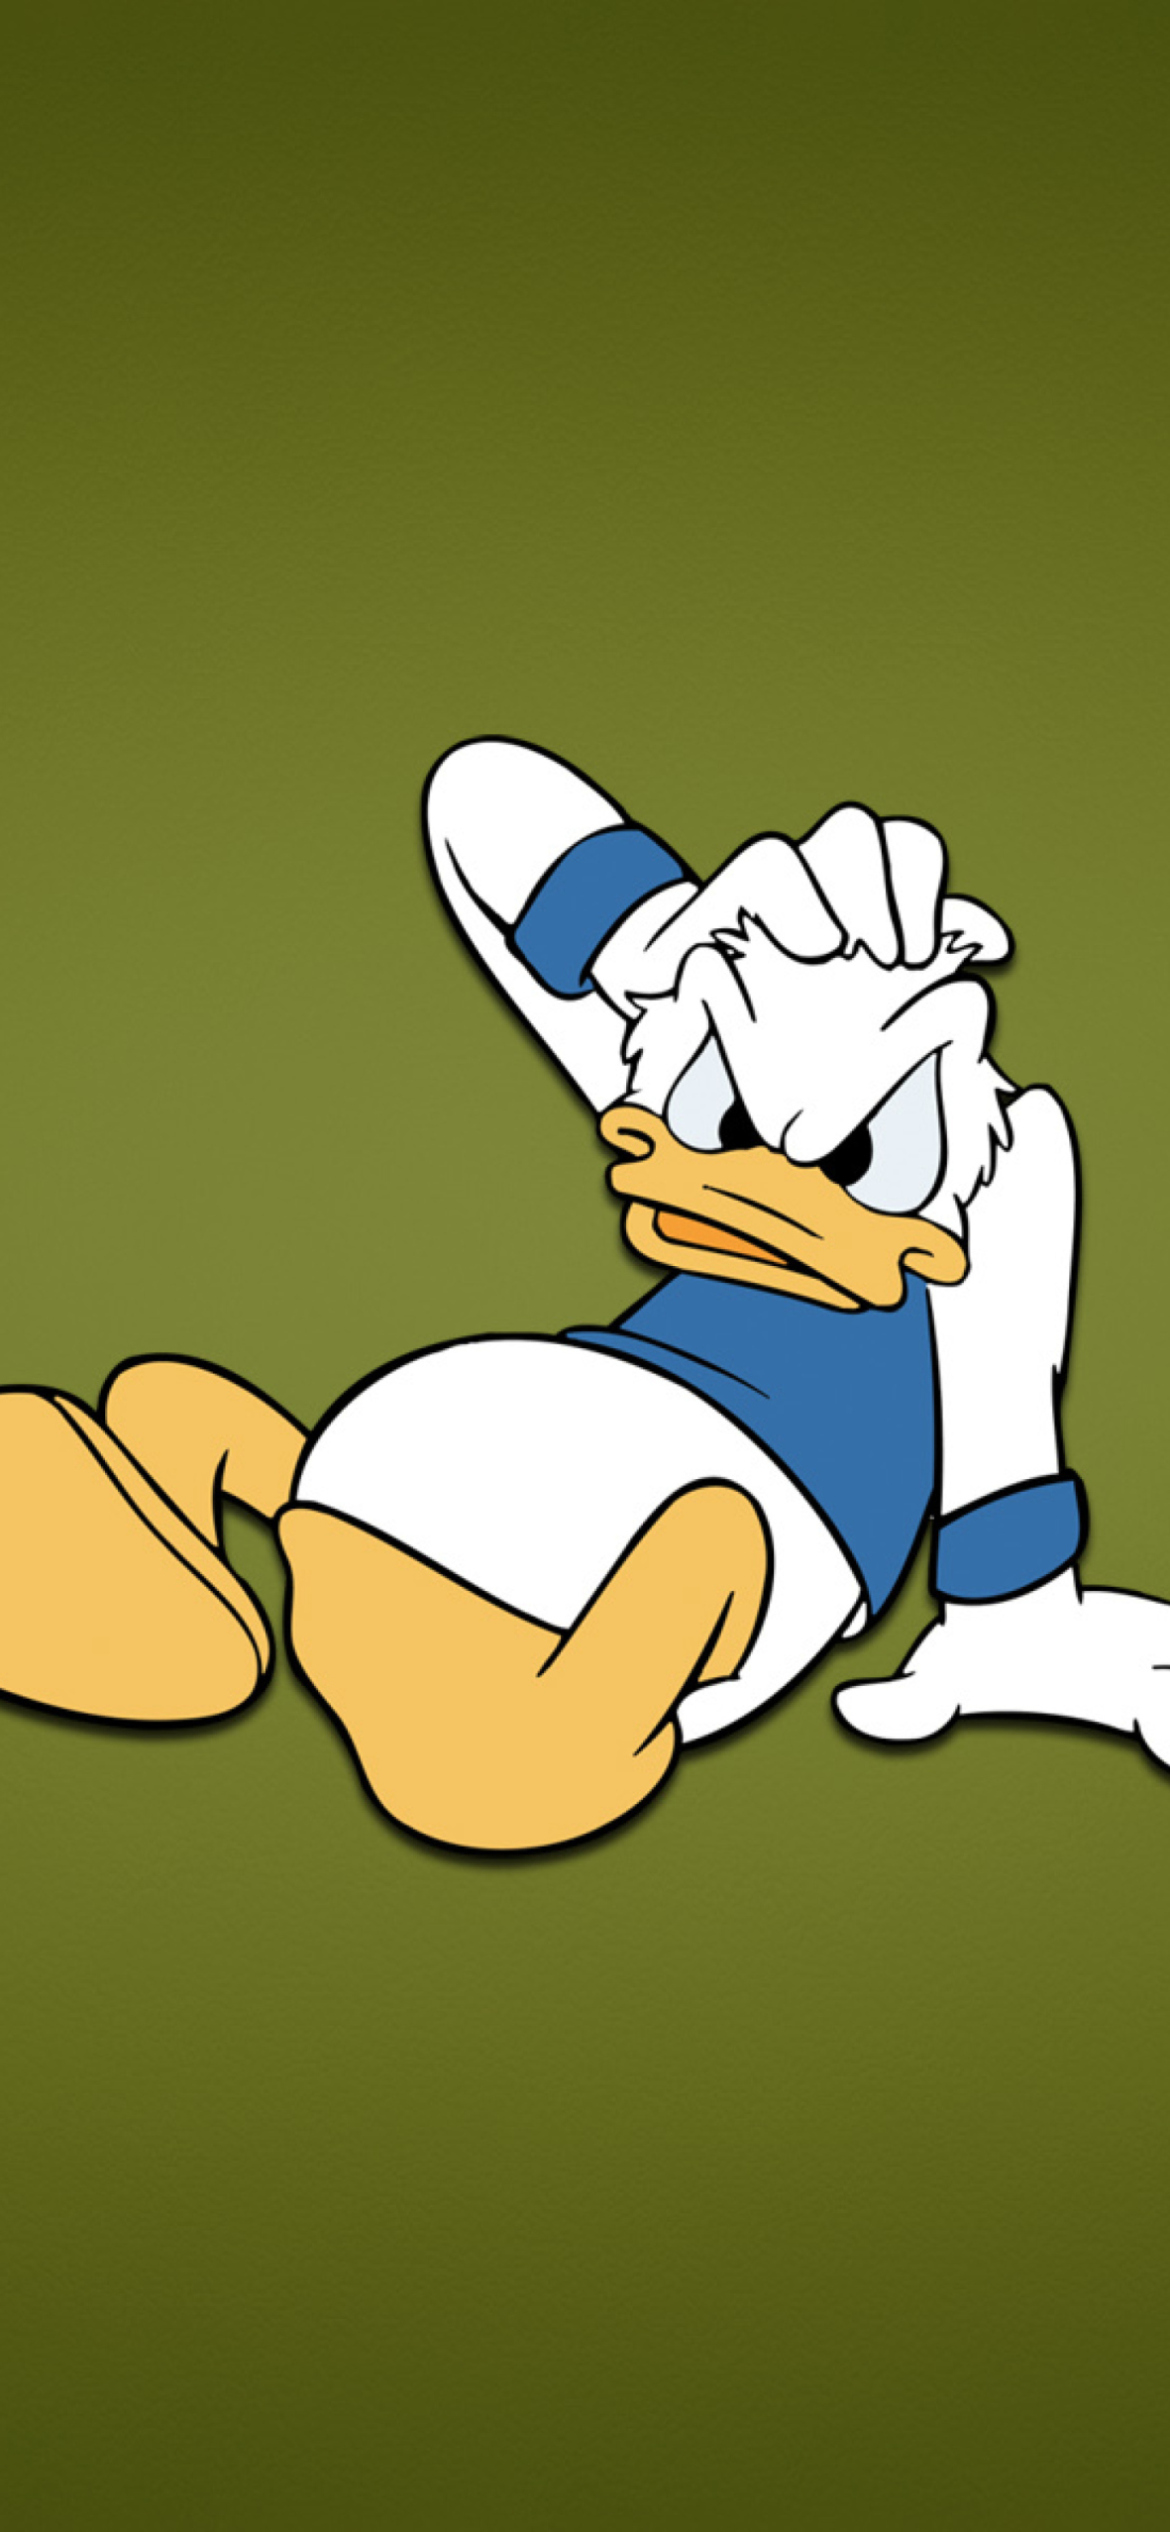 Funny Donald Duck wallpaper 1170x2532